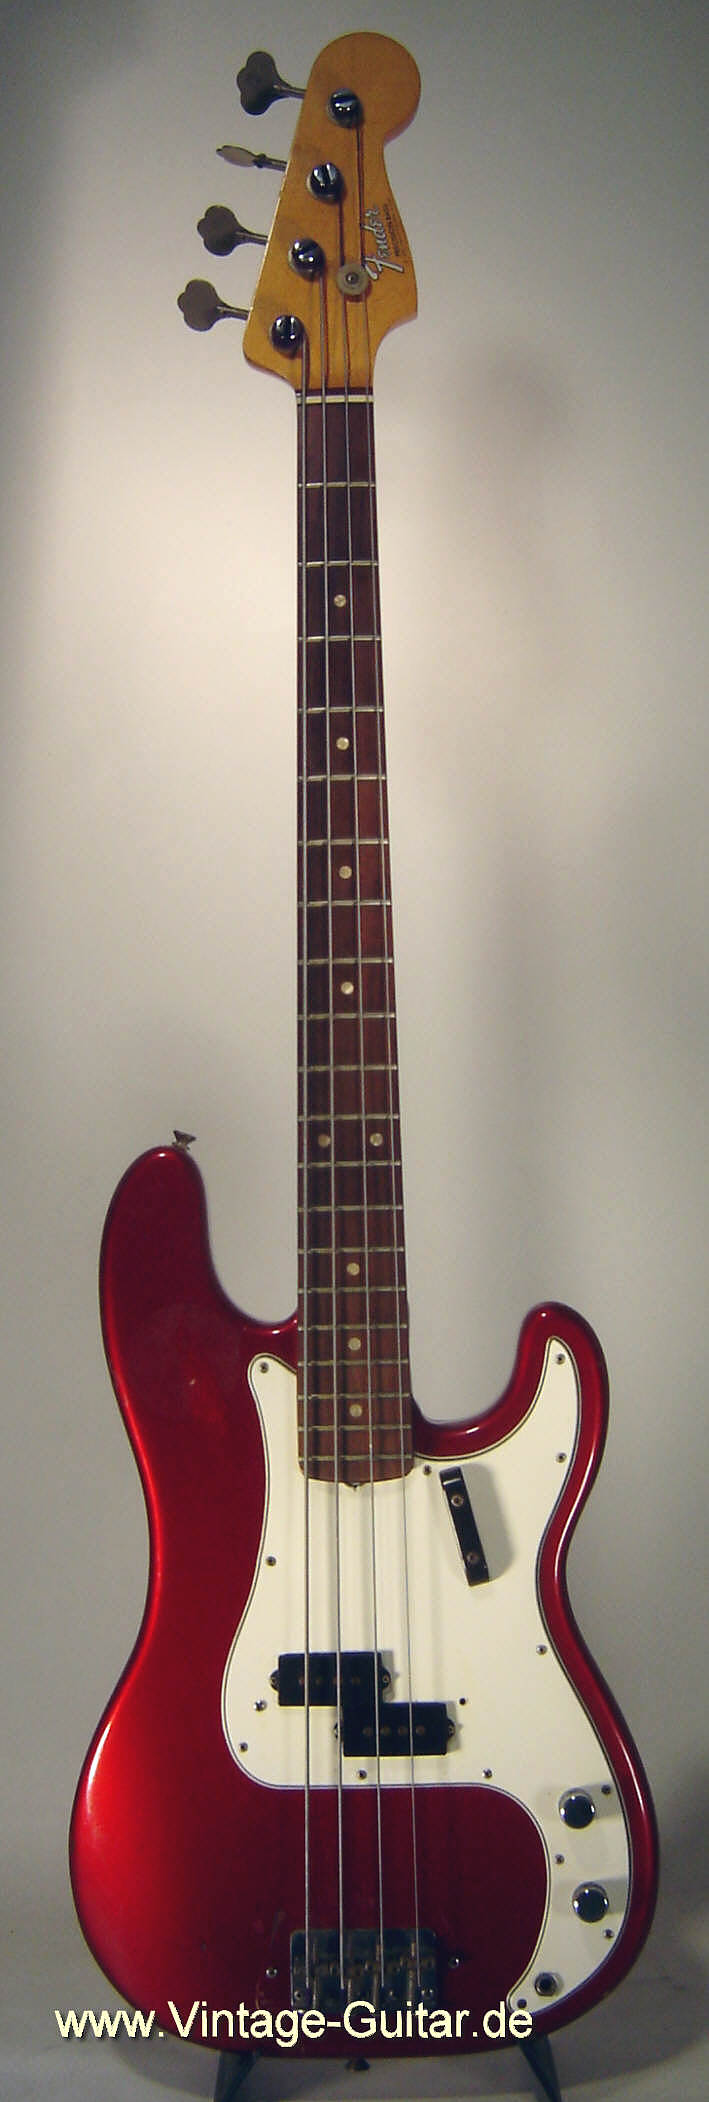 Fender-Precision_CAR_1966-1.jpg